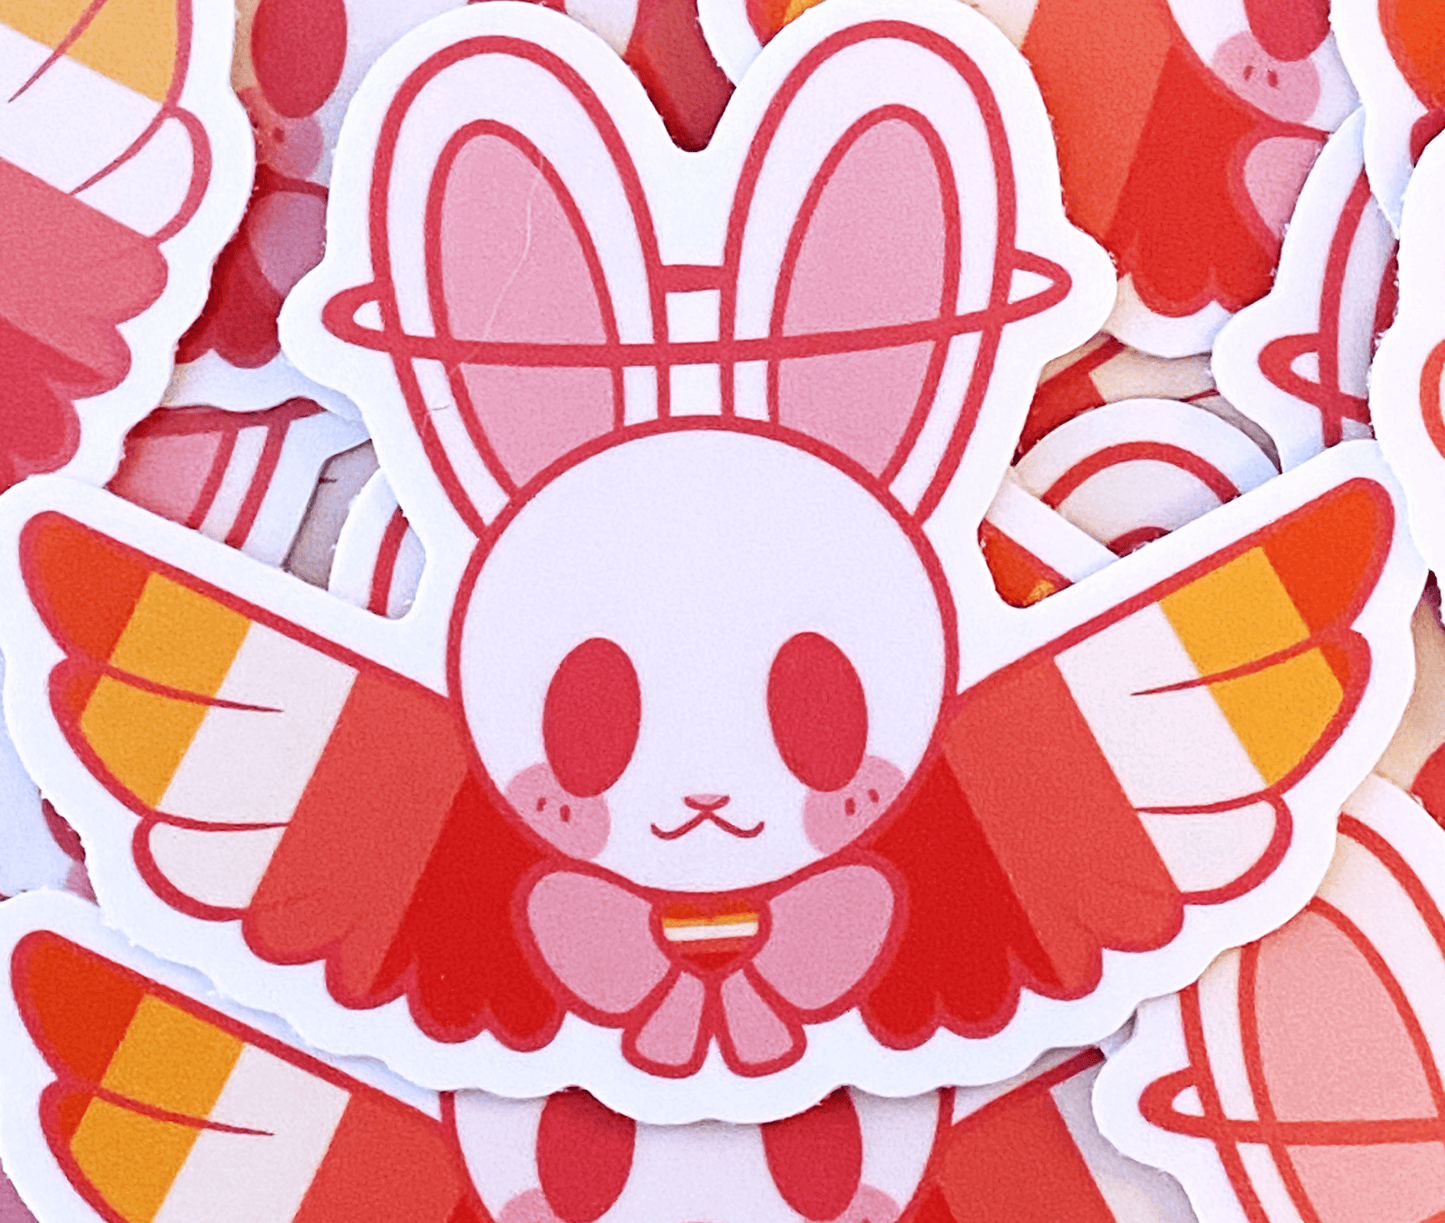 Pride Bunny Stickers